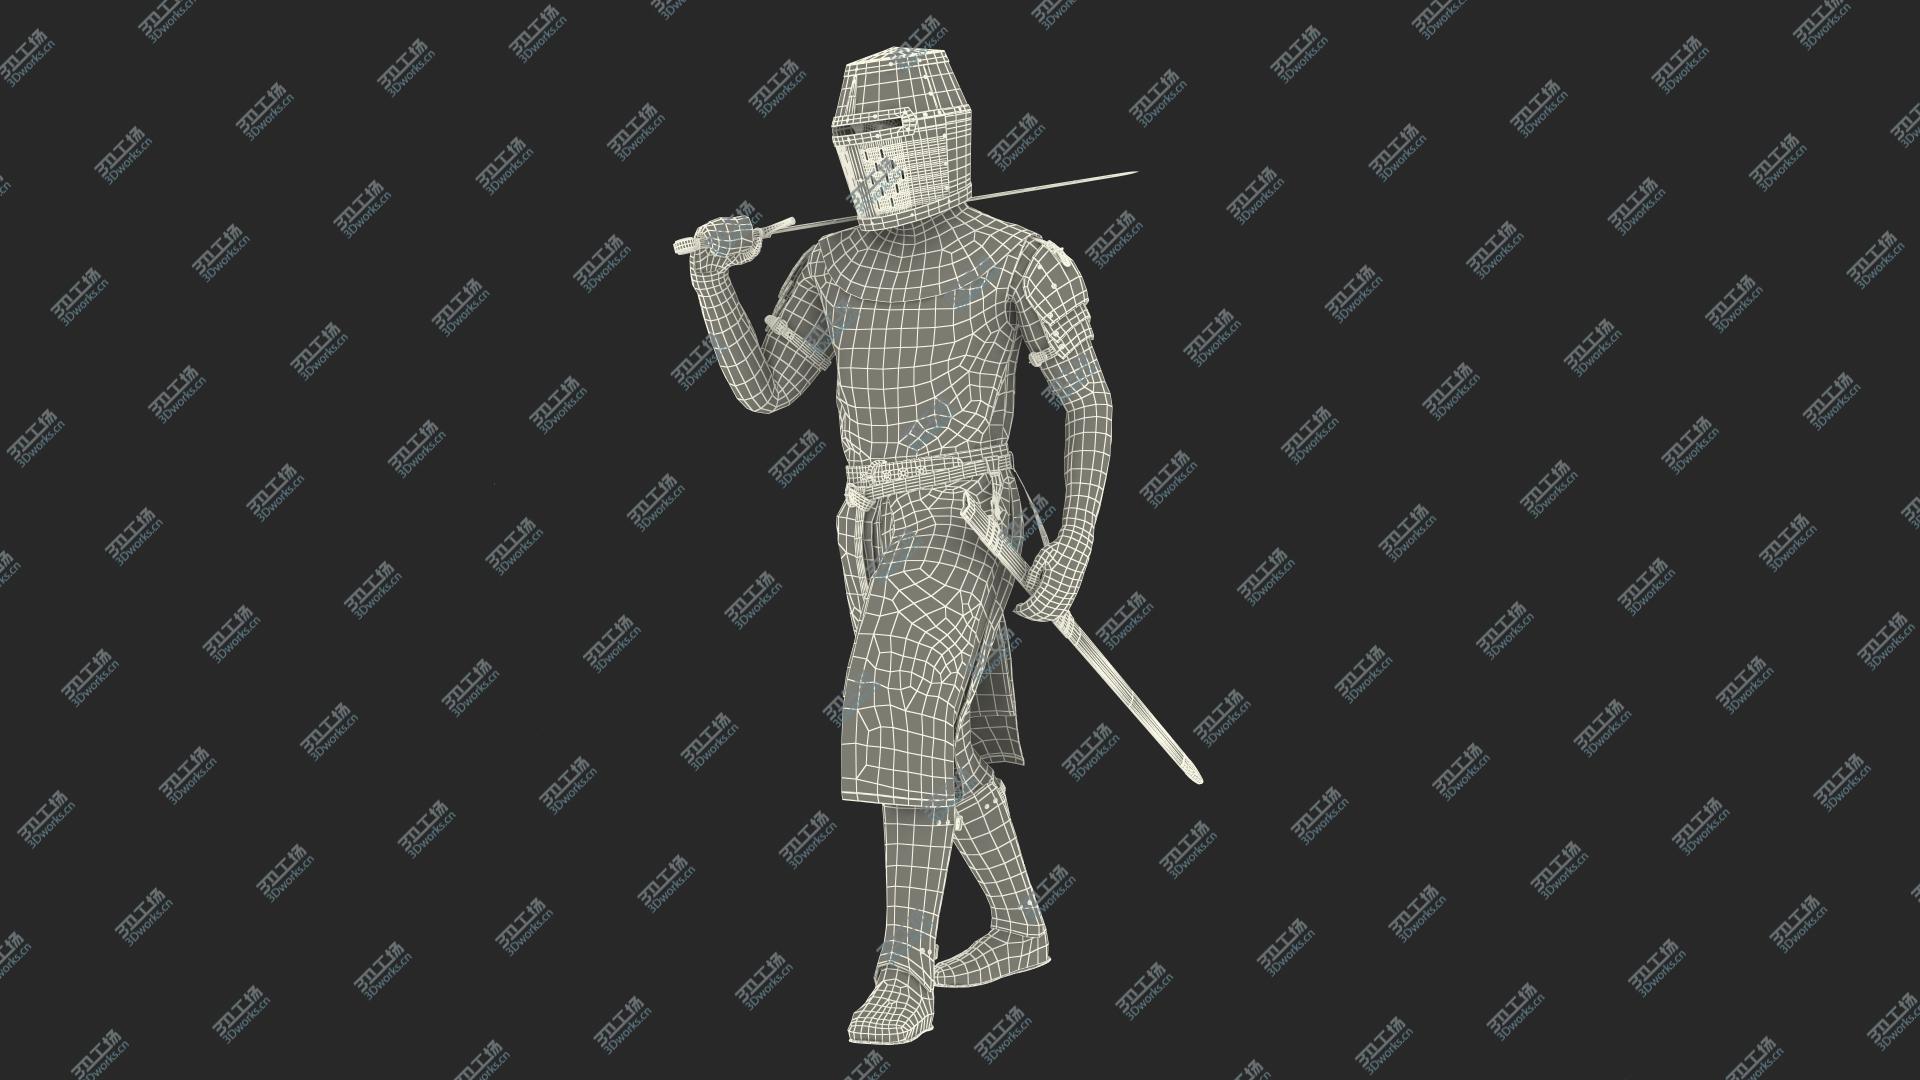 images/goods_img/202104093/Knight Templar Walking Pose 3D model/3.jpg